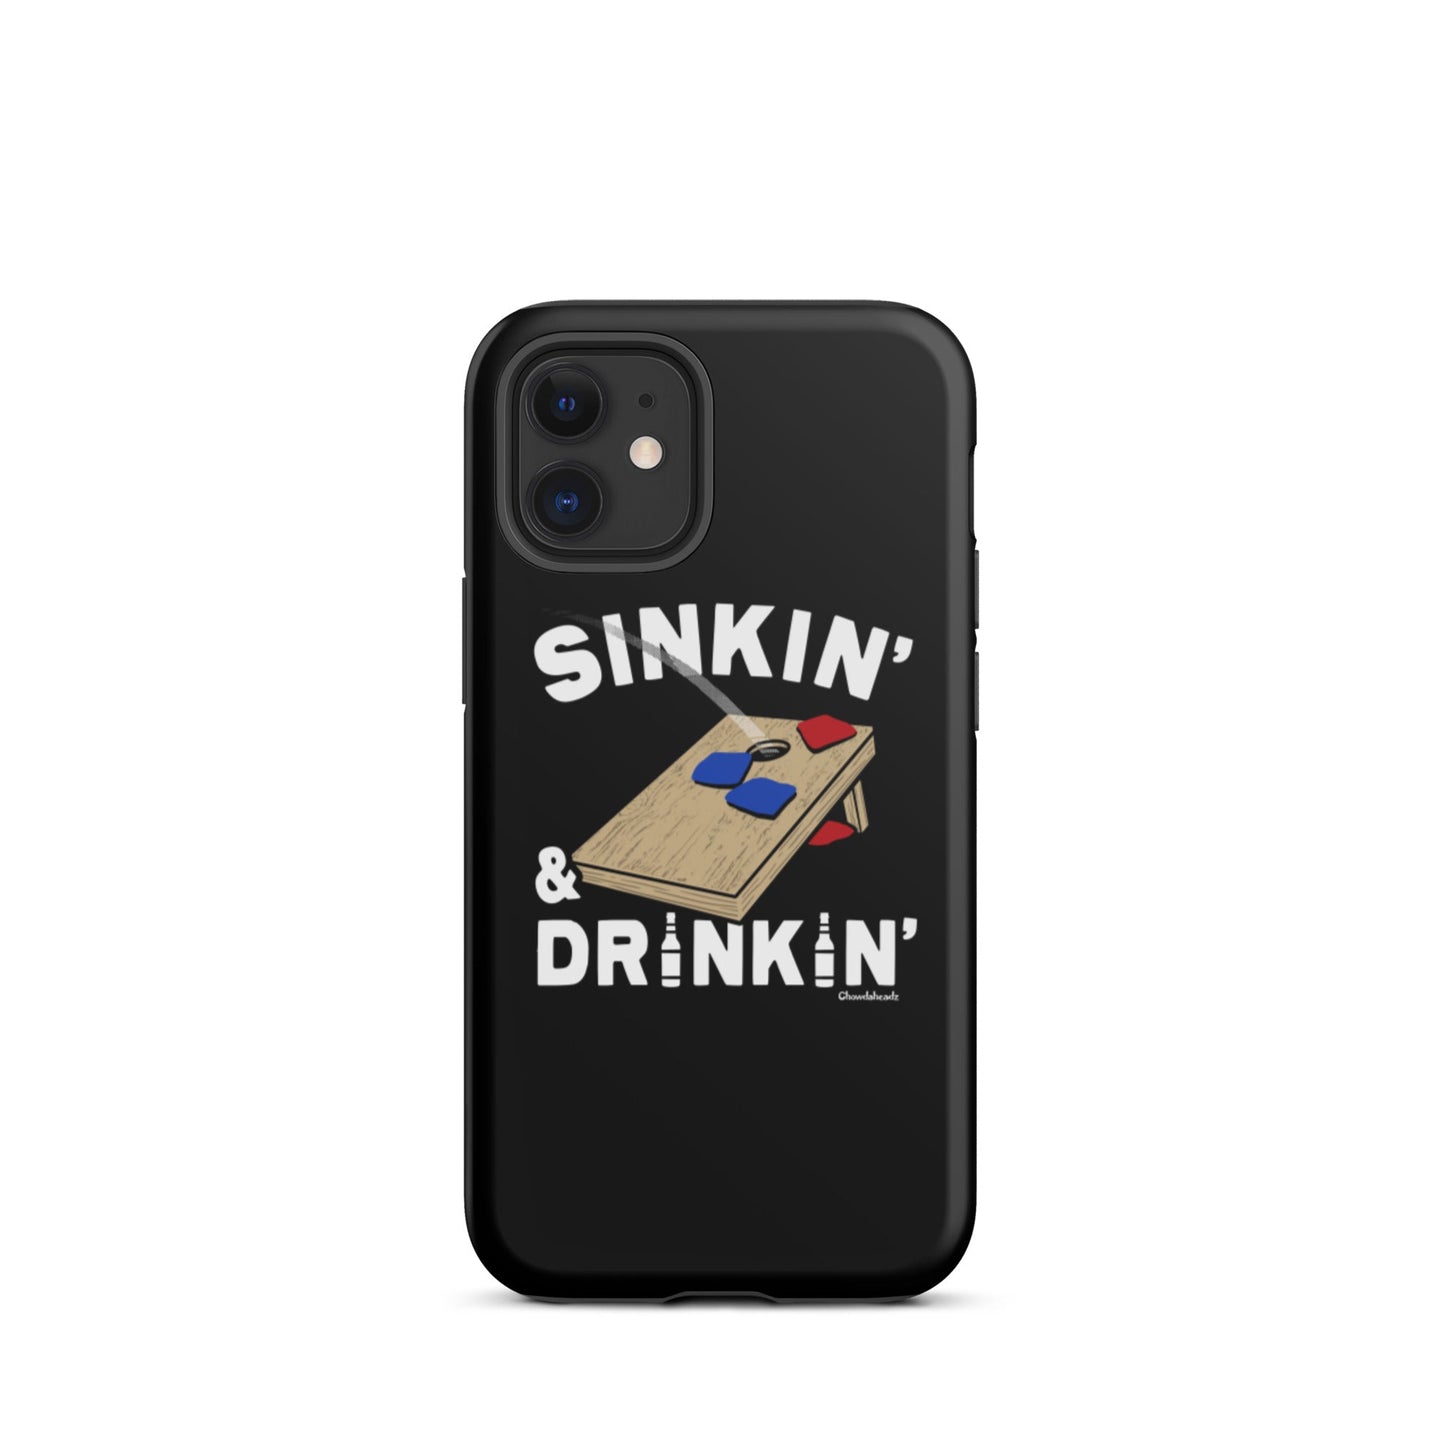 Sinkin' & Drinkin' Tough iPhone case - Chowdaheadz